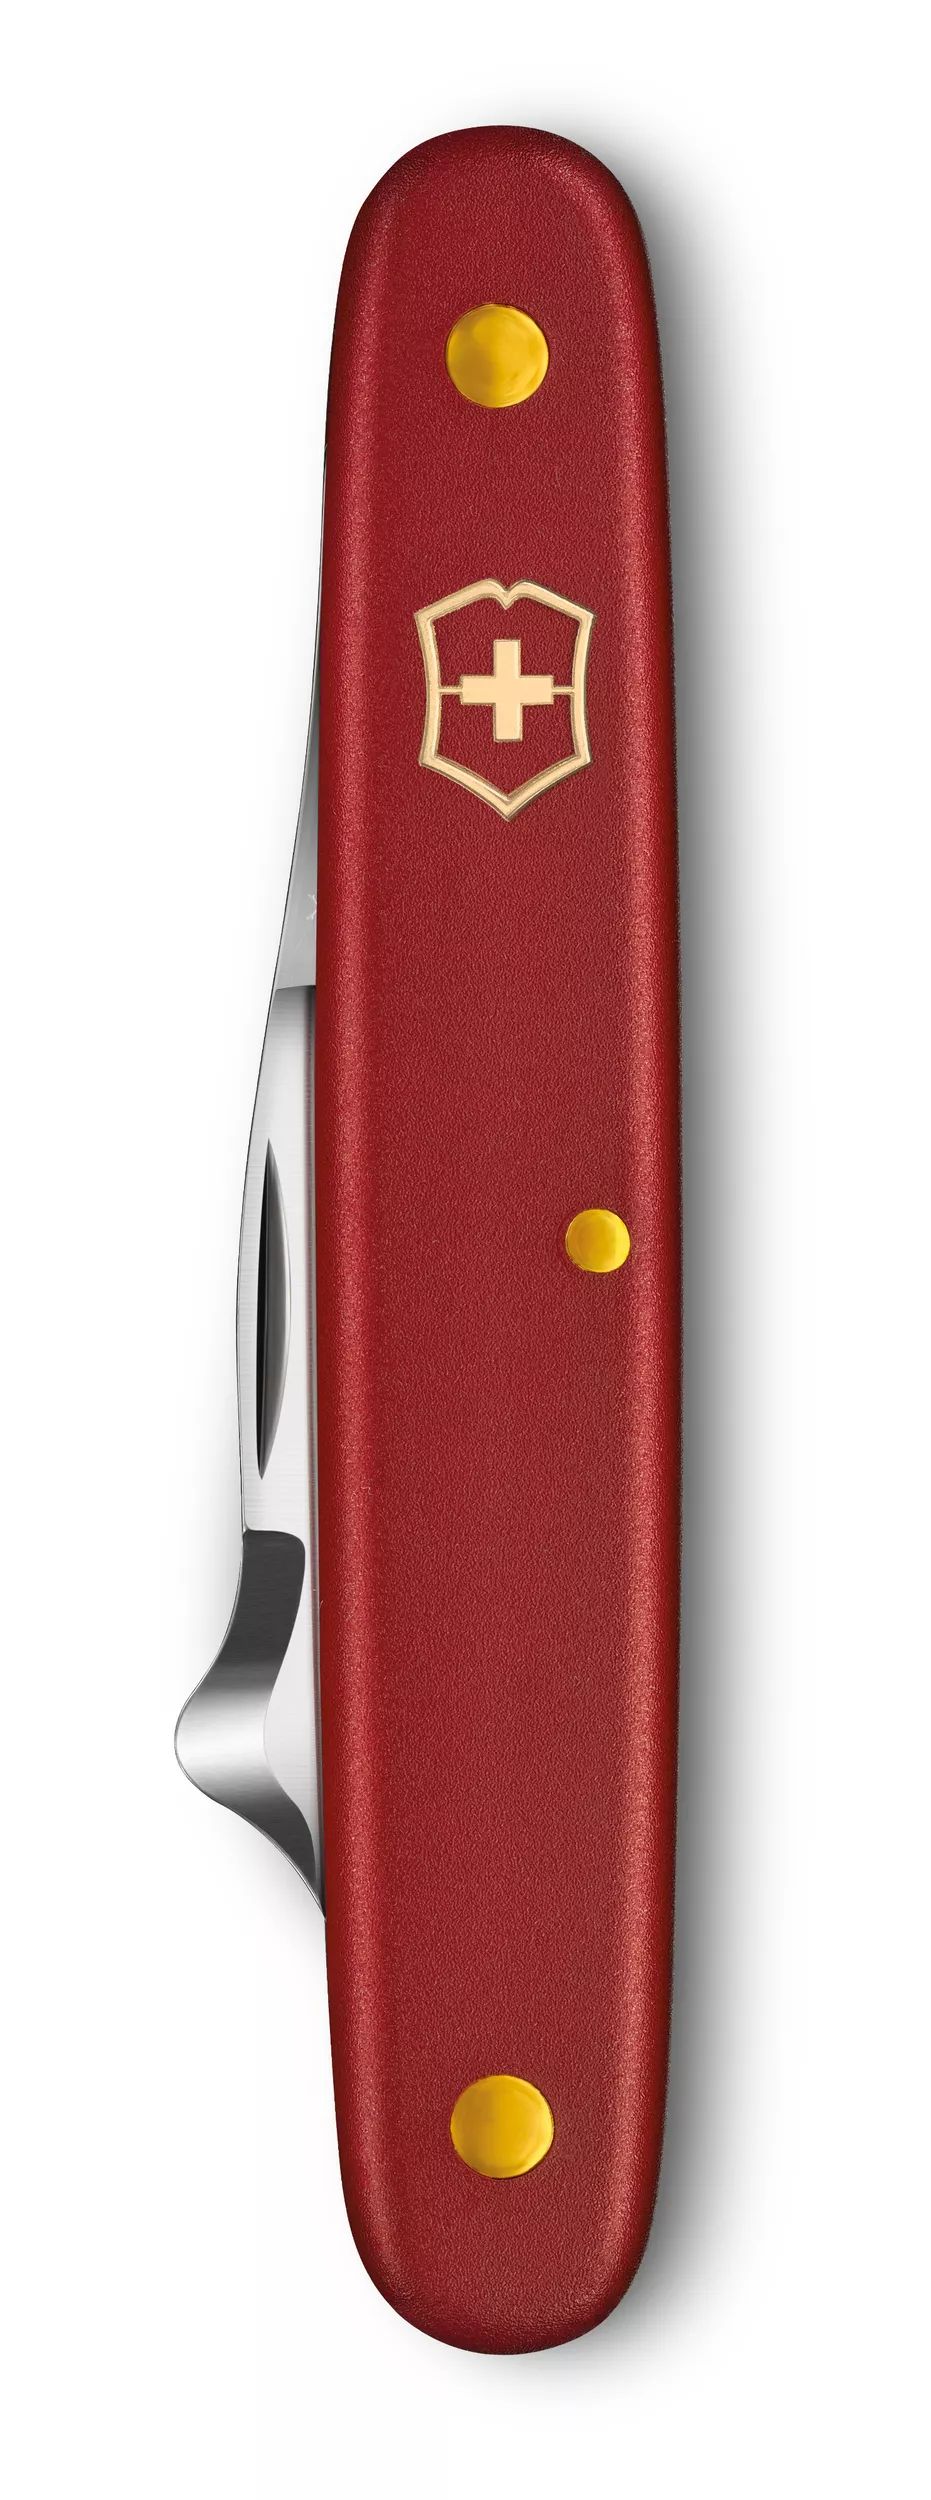 Budding Knife Combi S - 3.9040.B1